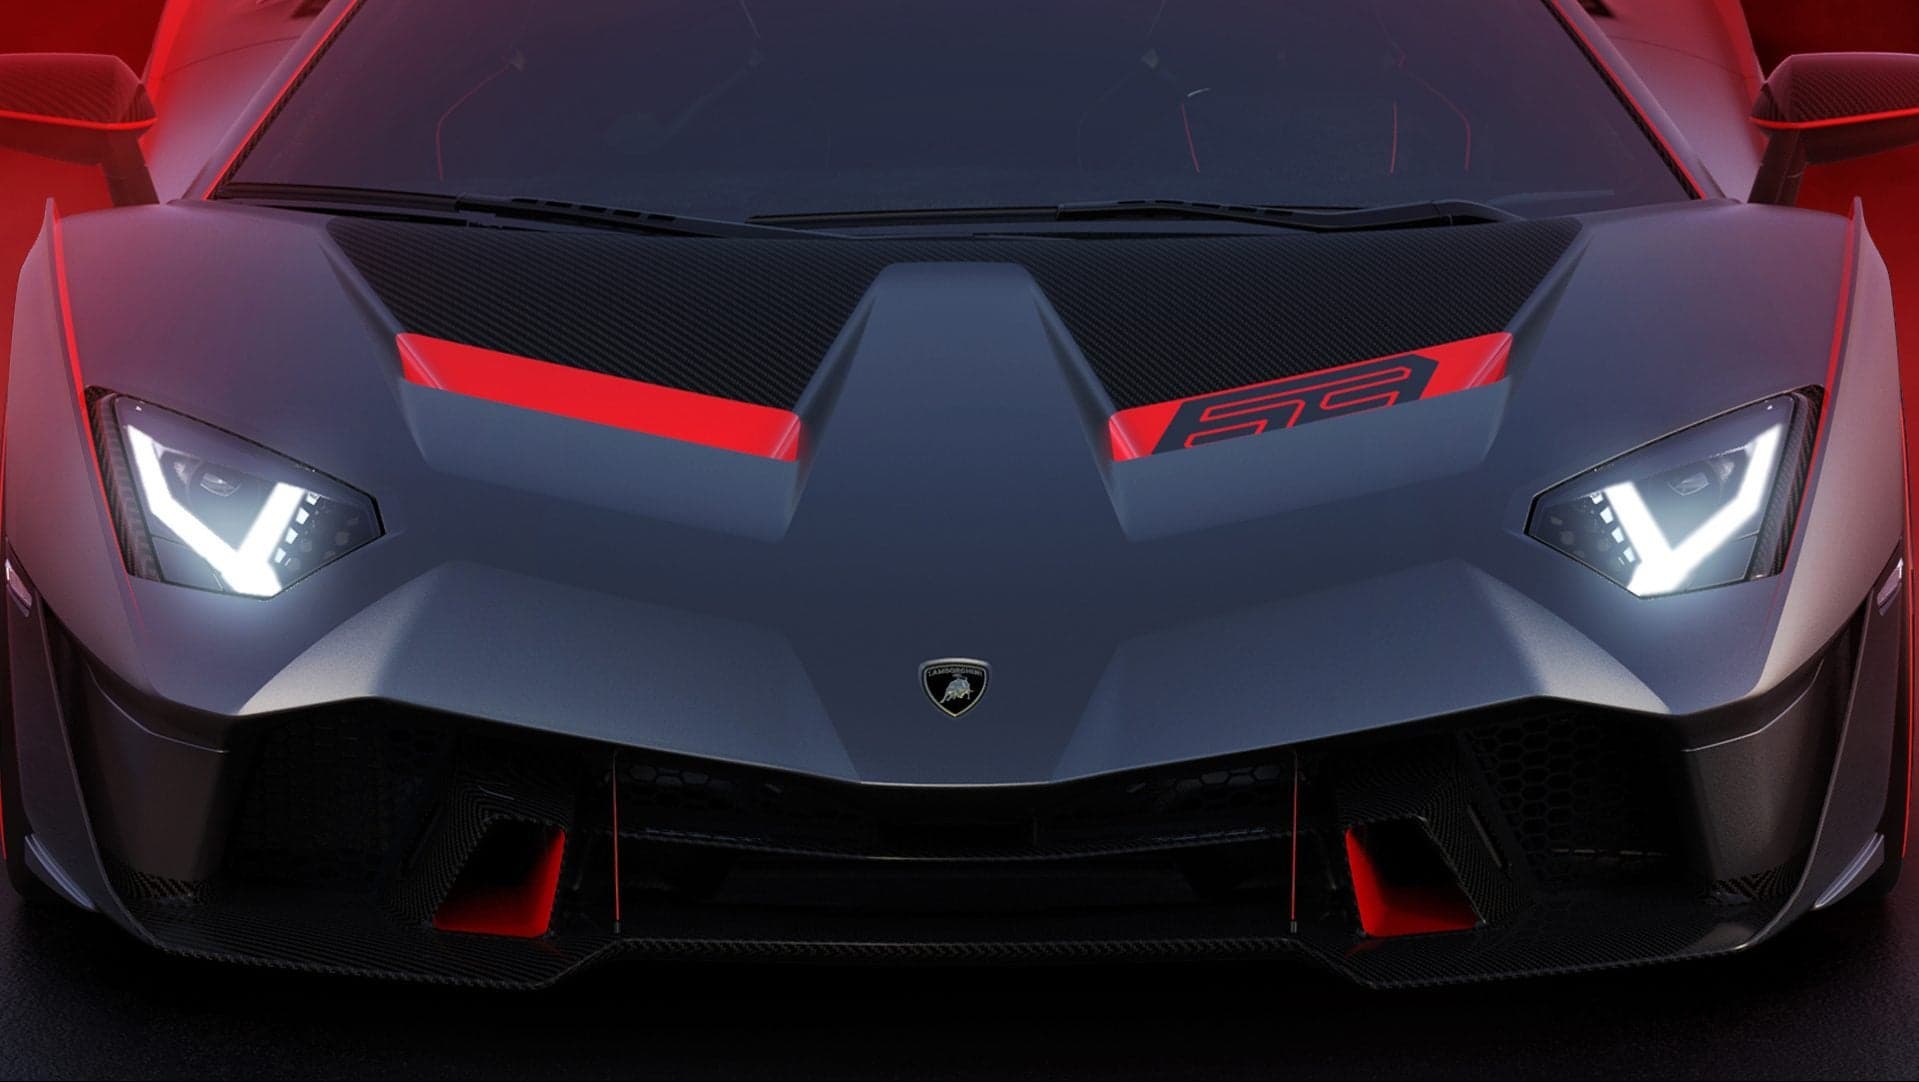 Lamborghini Confirms Aventador and Huracan Successors Will Be Plug-In Hybrids